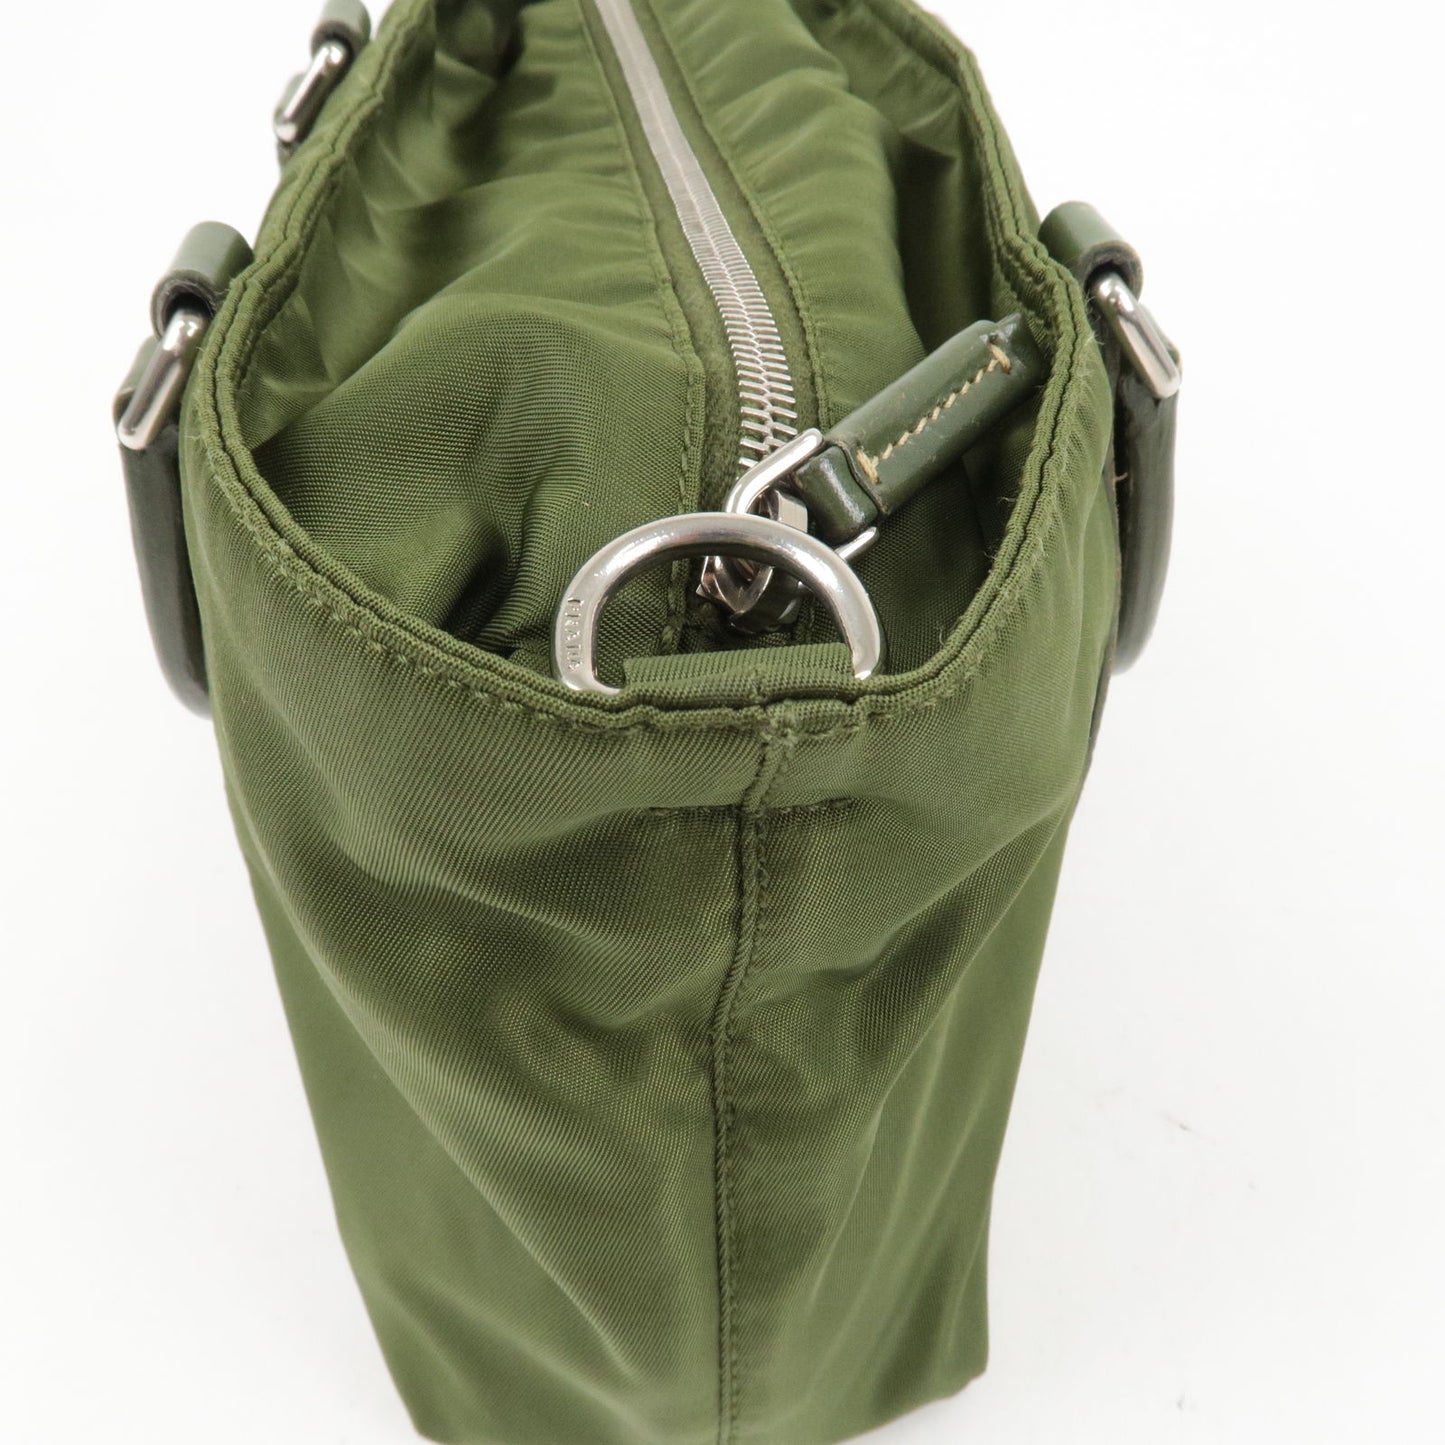 PRADA Nylon Leather 2Way Bag Hand Bag Green BN1052